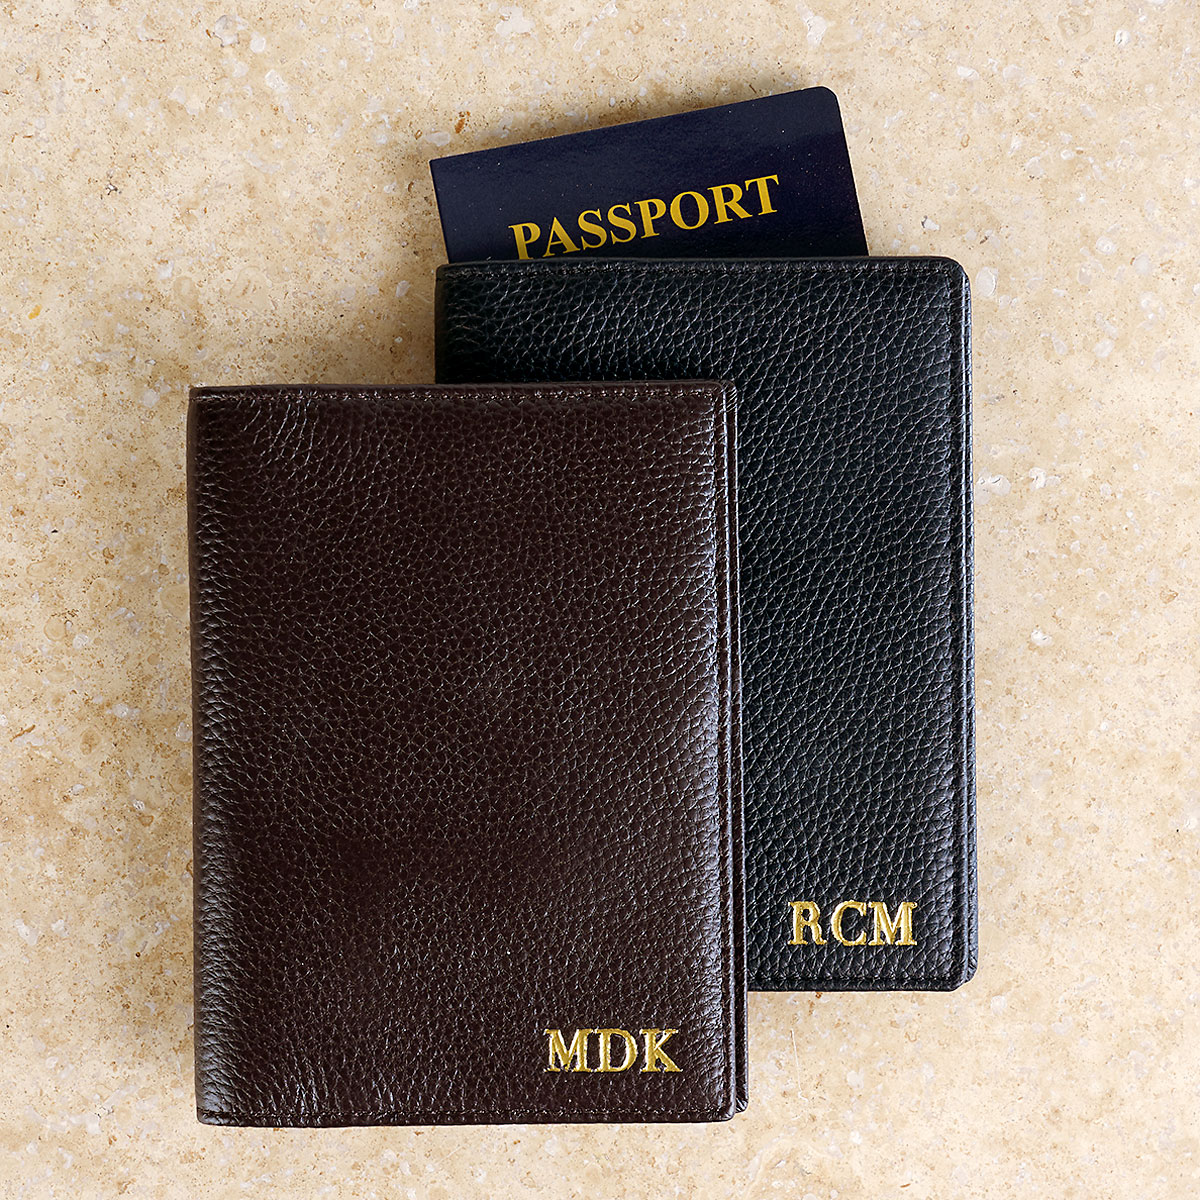 TOTEME Monogram Leather Passport Holder